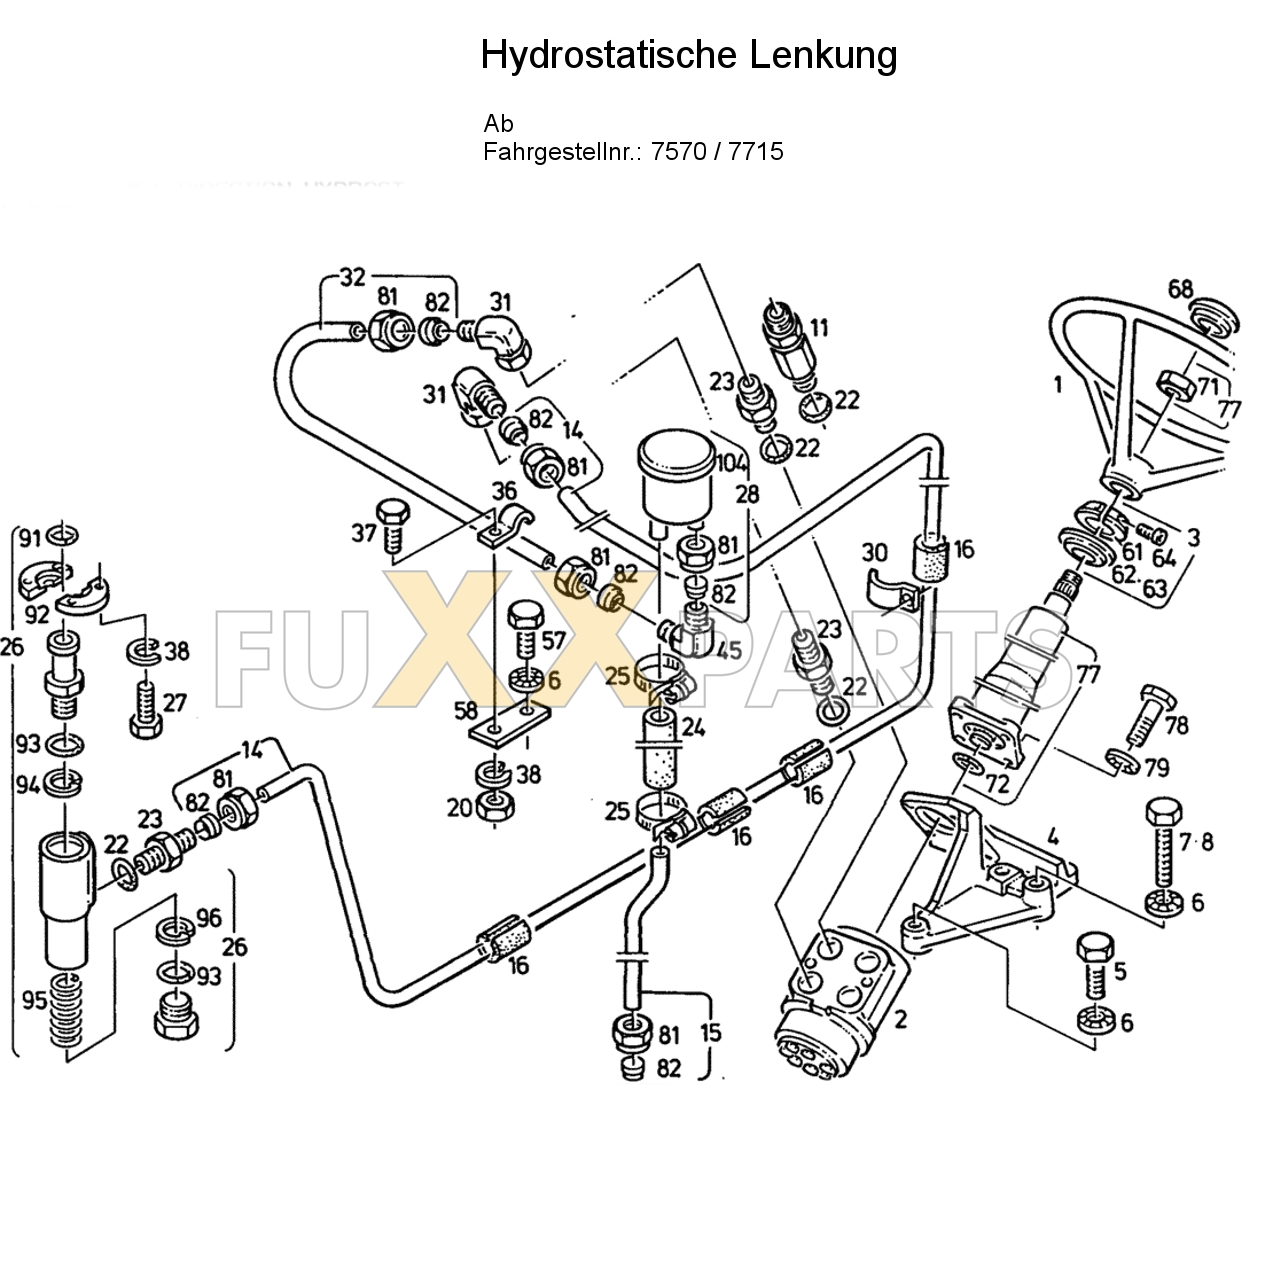 D 6807 Hydrostatische Lenkung 2.1